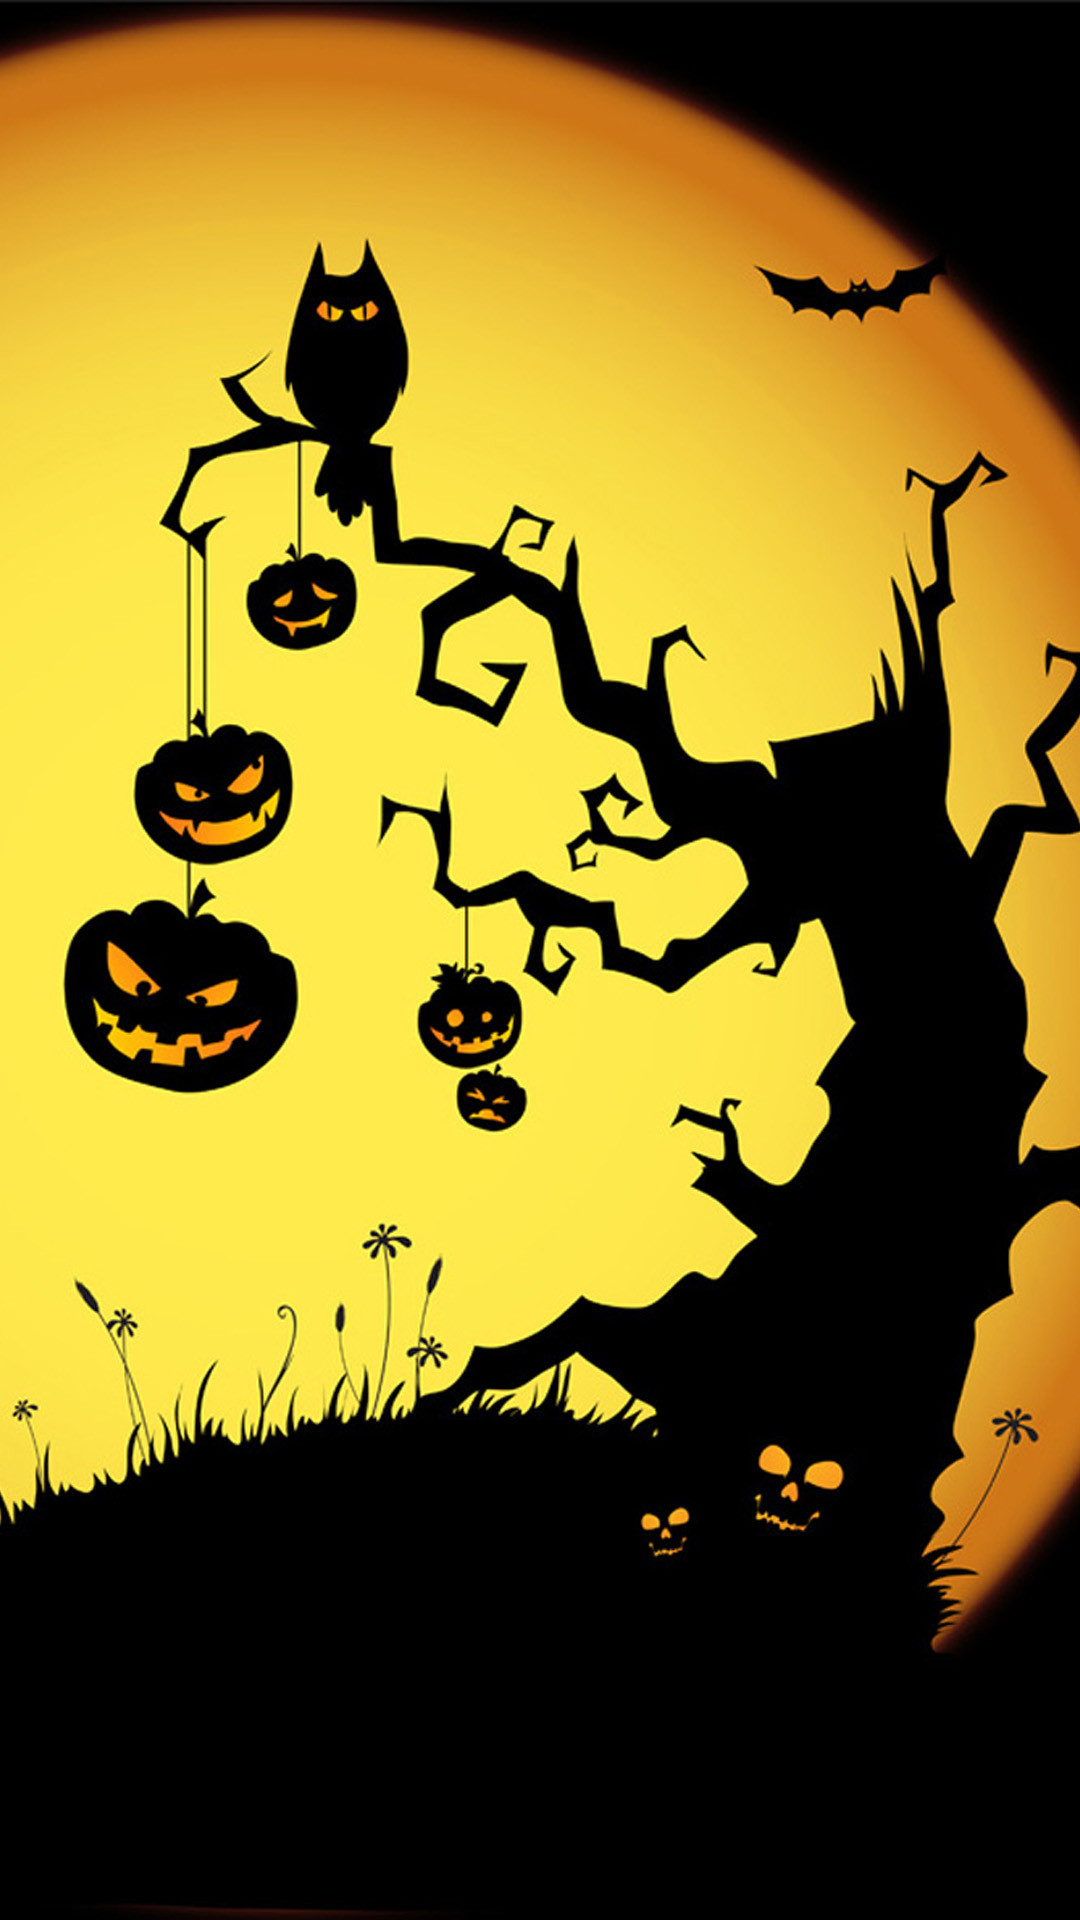 1080x1920 Halloween Wallpaper for iPhone 6 - WallpaperSafari